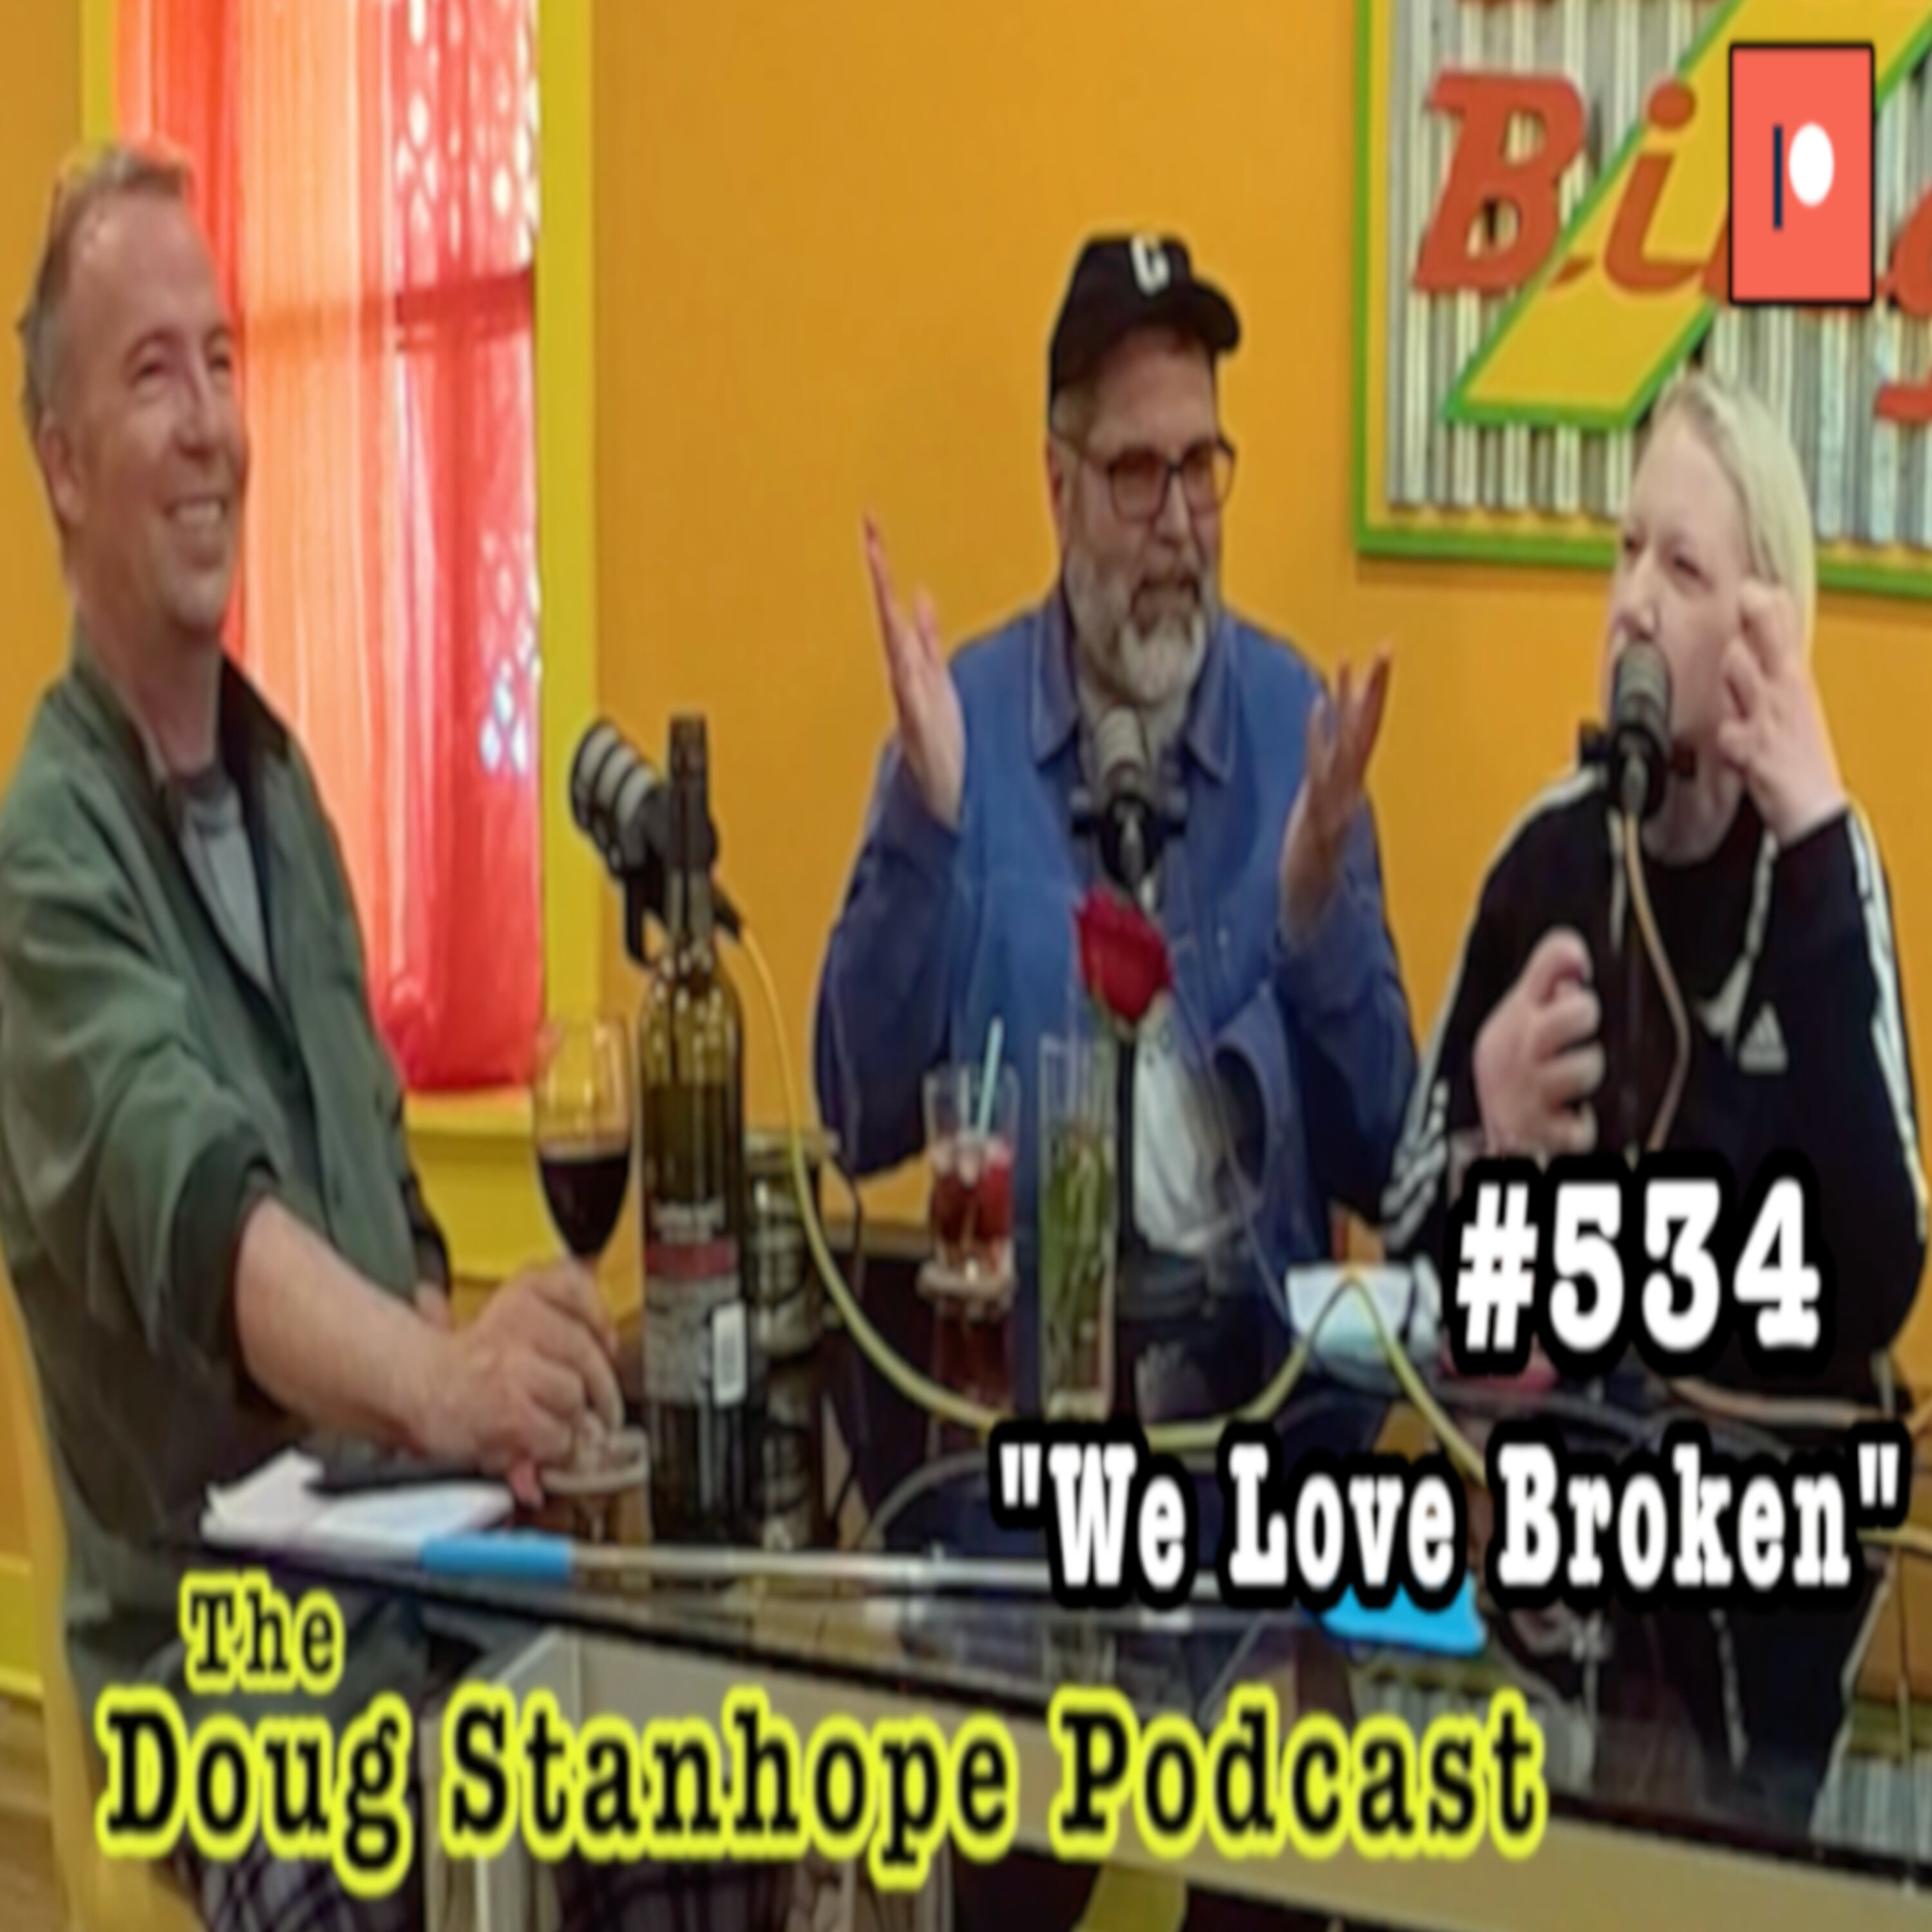 Doug Stanhope Podcast #534 - ”We Love Broken”